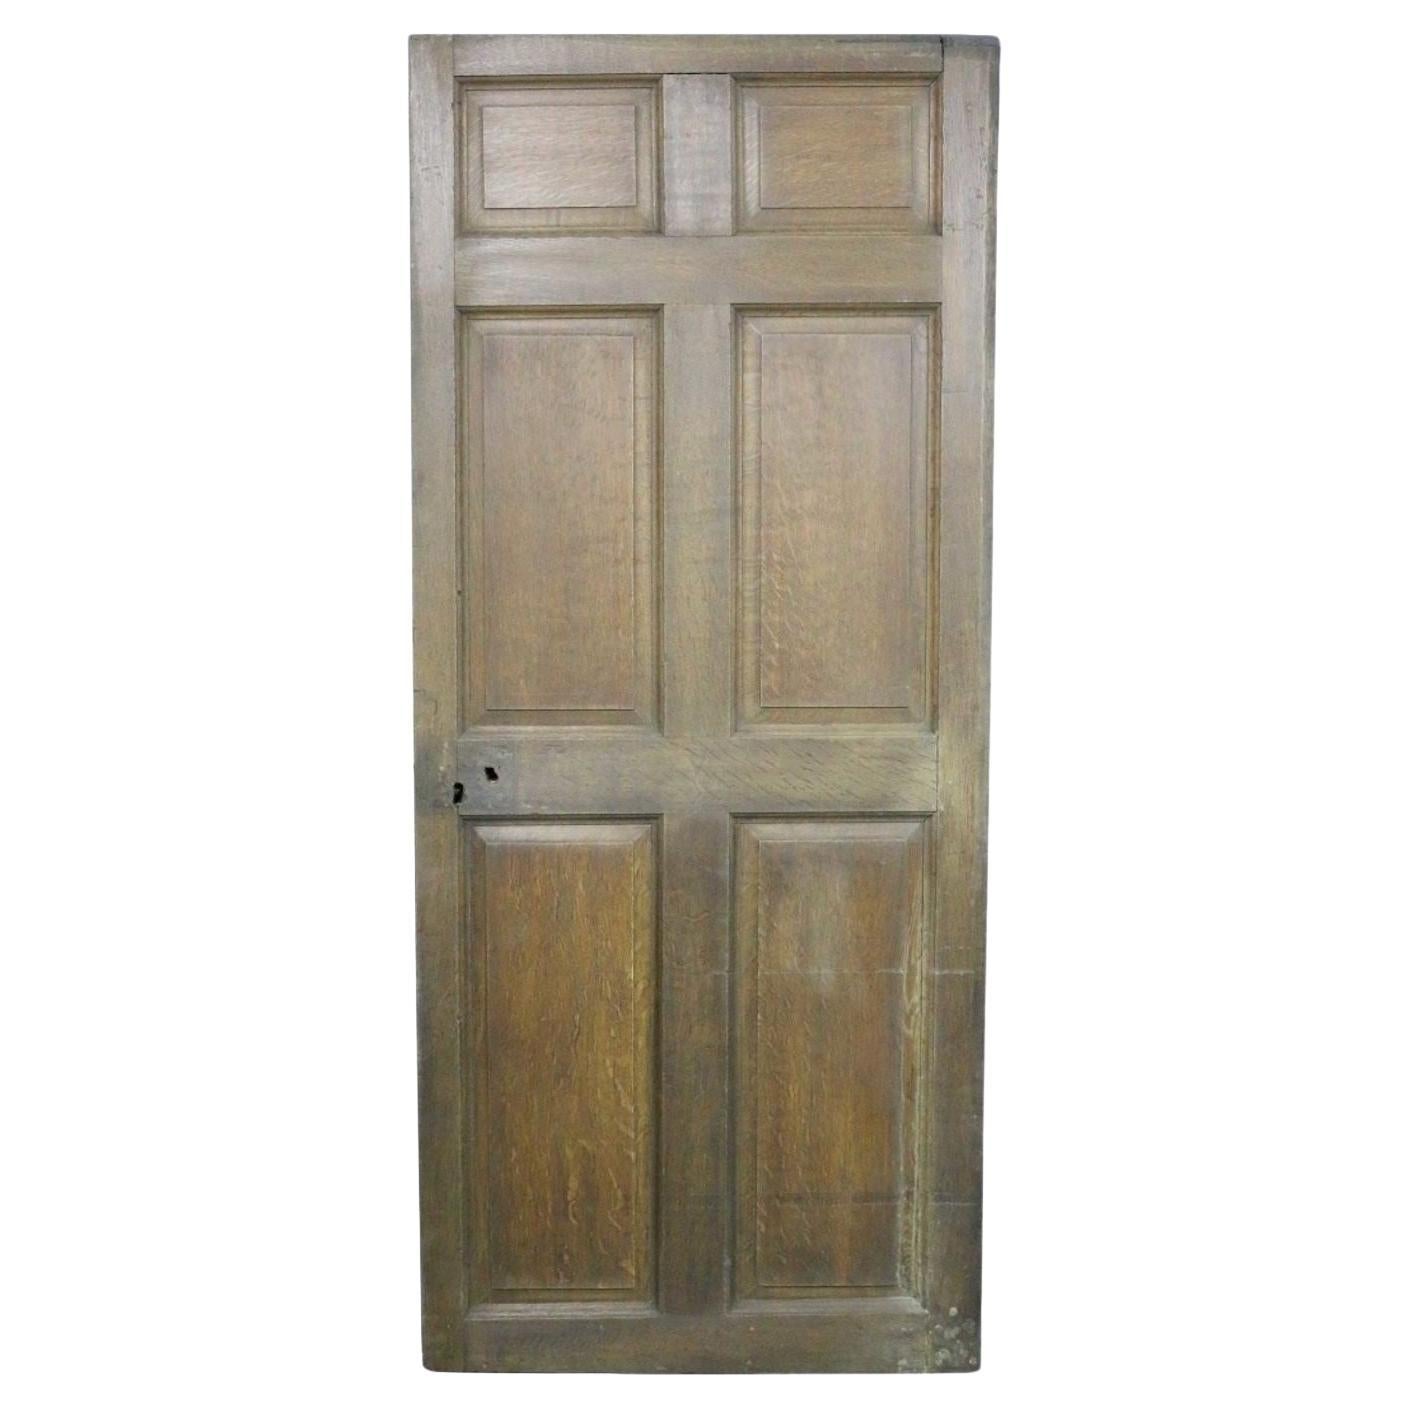 A Reclaimed Early 19th Century Oak Front Door